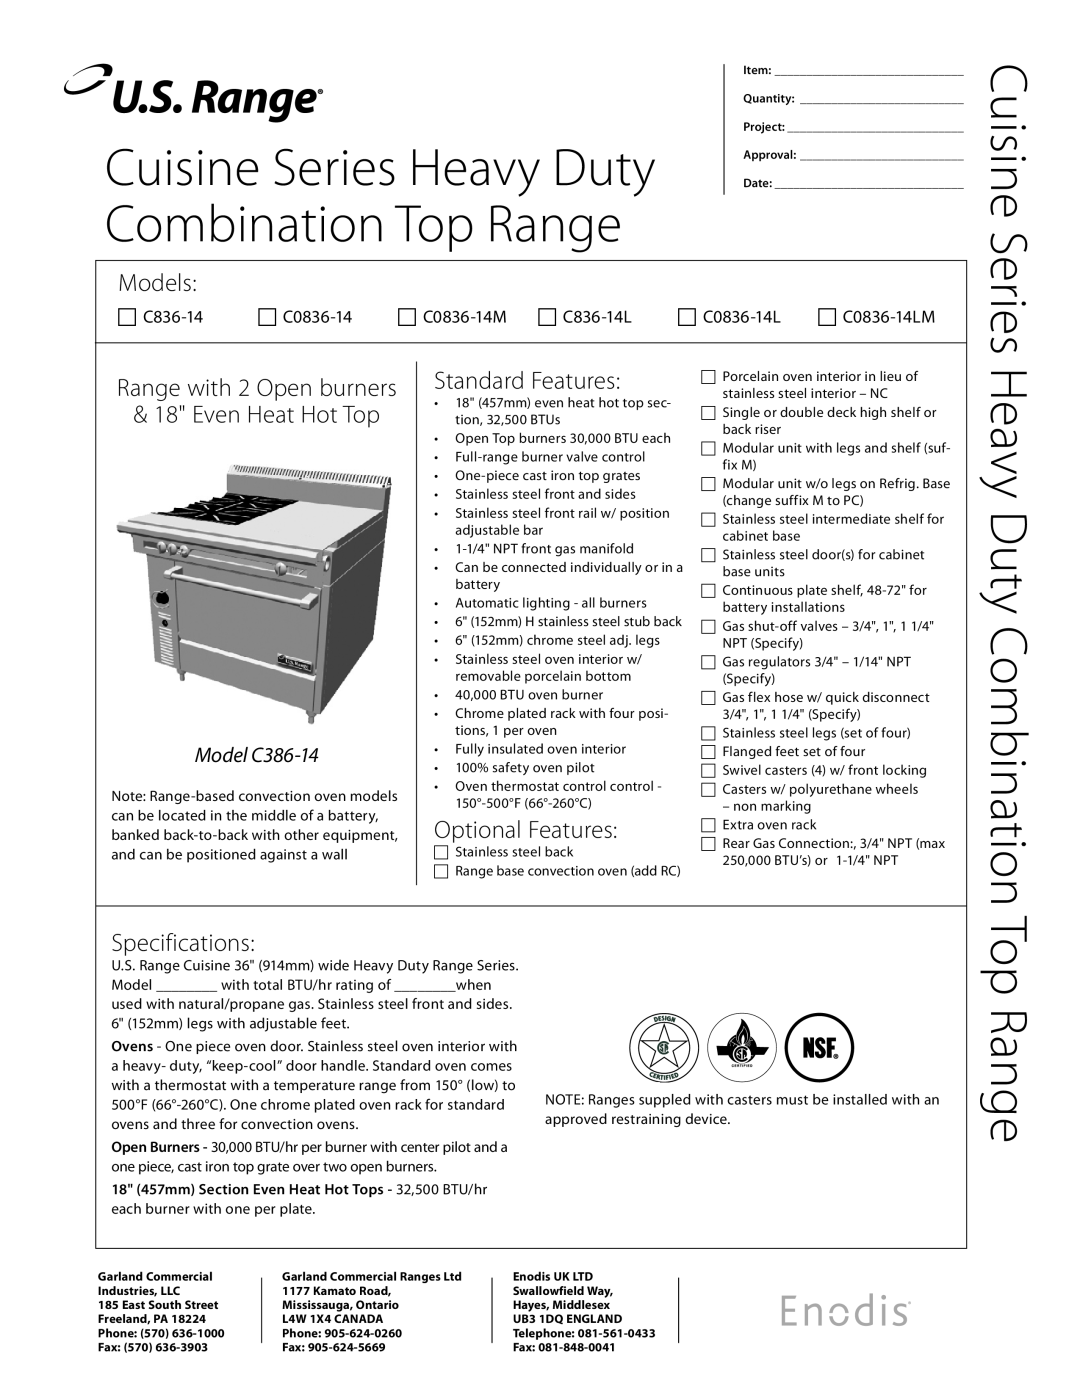 Garland C836-14L, C0836-14 specifications Combination Top Range, Cuisine Series Heavy Duty, Heavy Duty Combination, Models 